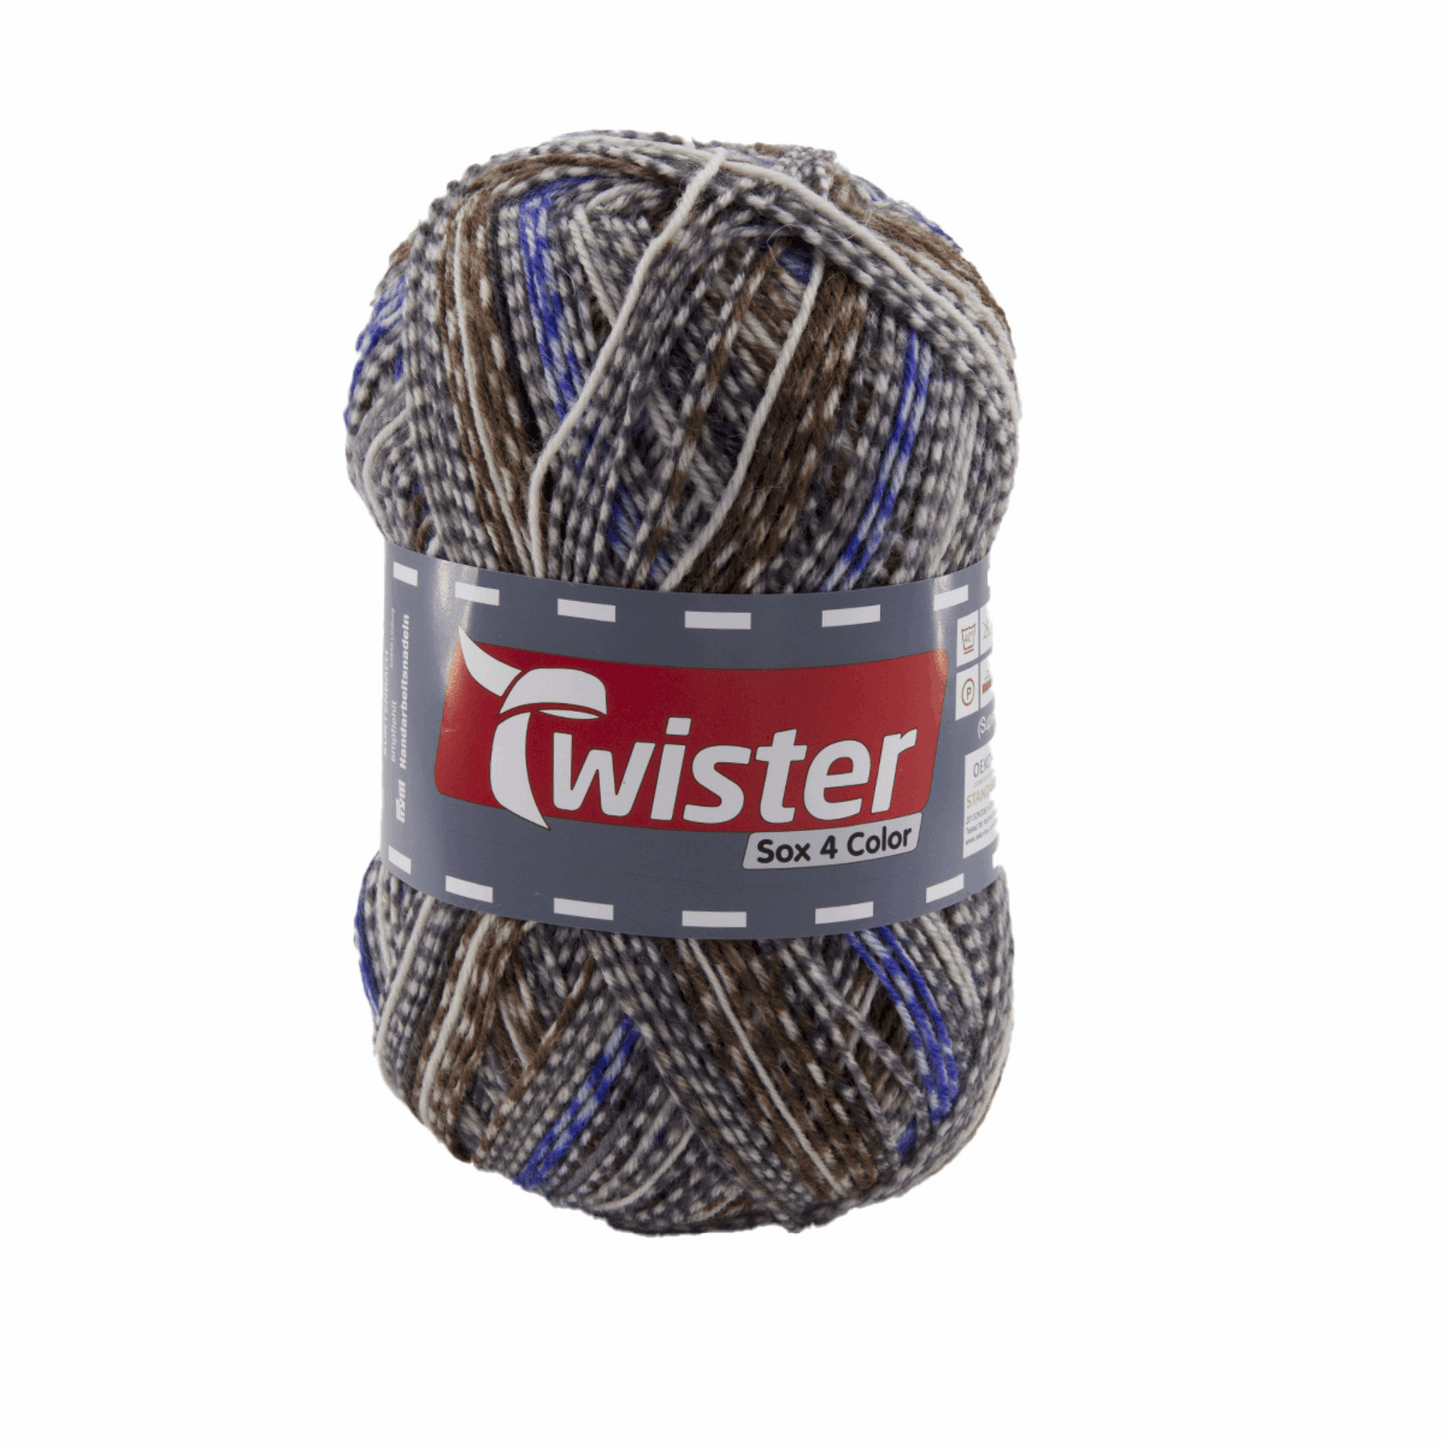 Twister Sox4 Color superwash, beige braun, 98306, Farbe 823